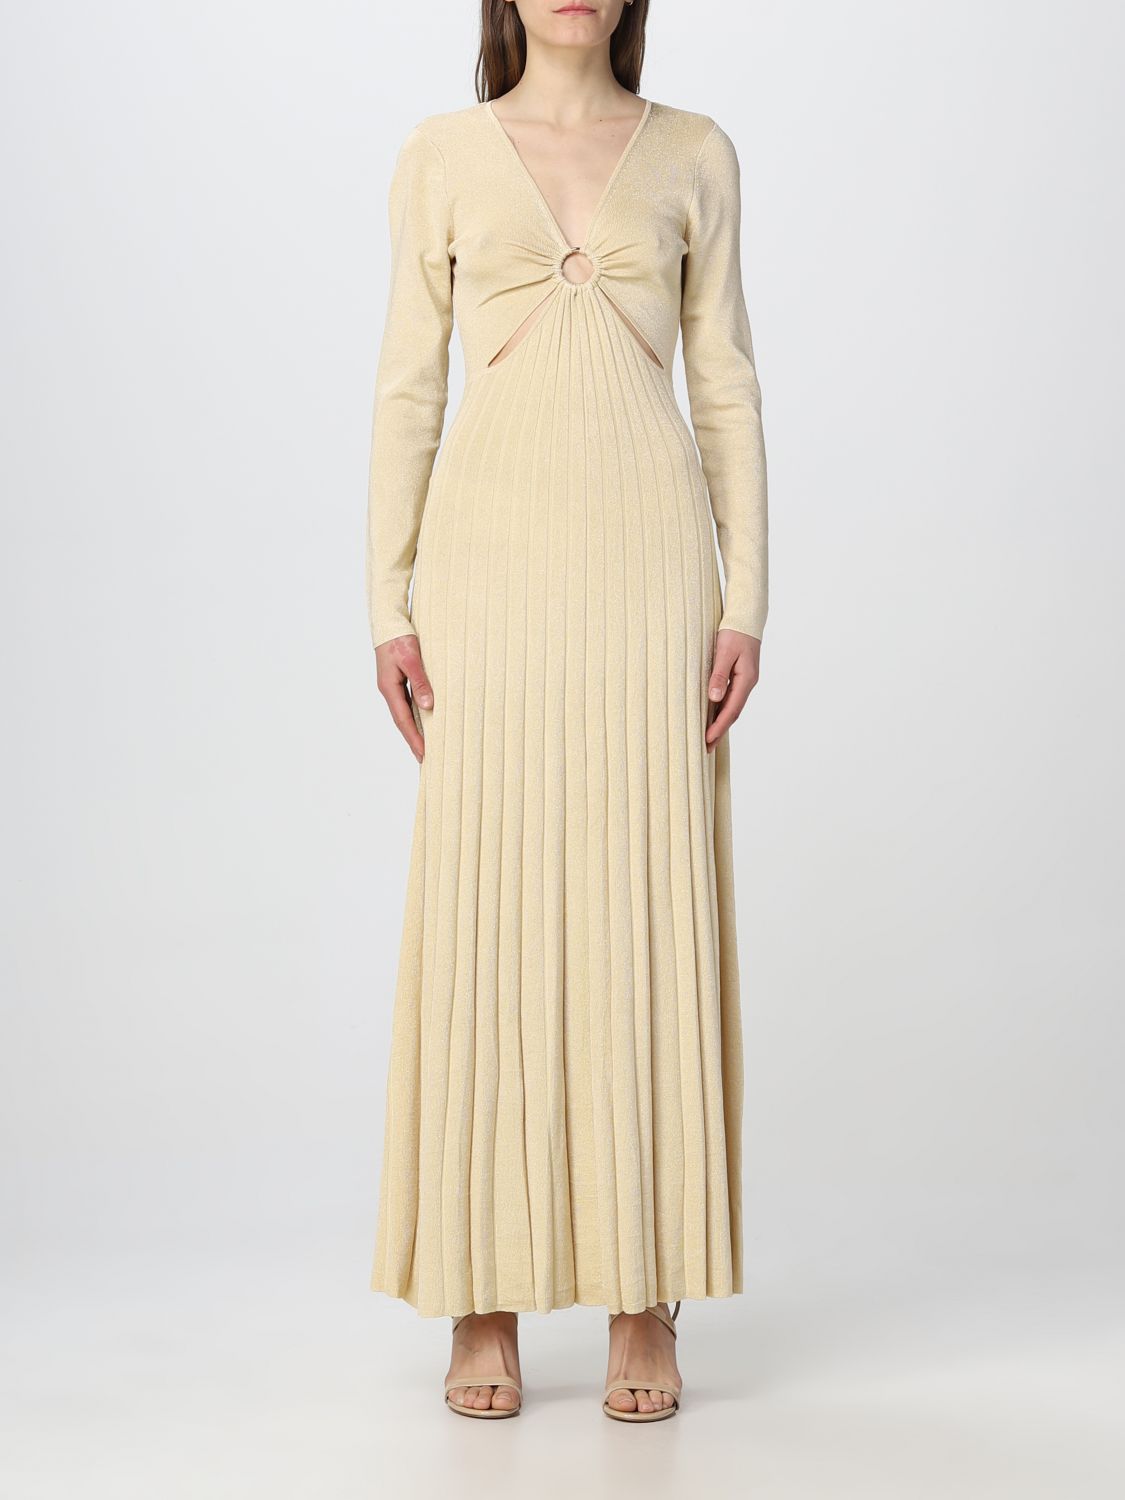 MICHAEL KORS: dress for woman - Gold | Michael Kors dress MS381MV61R online  on 